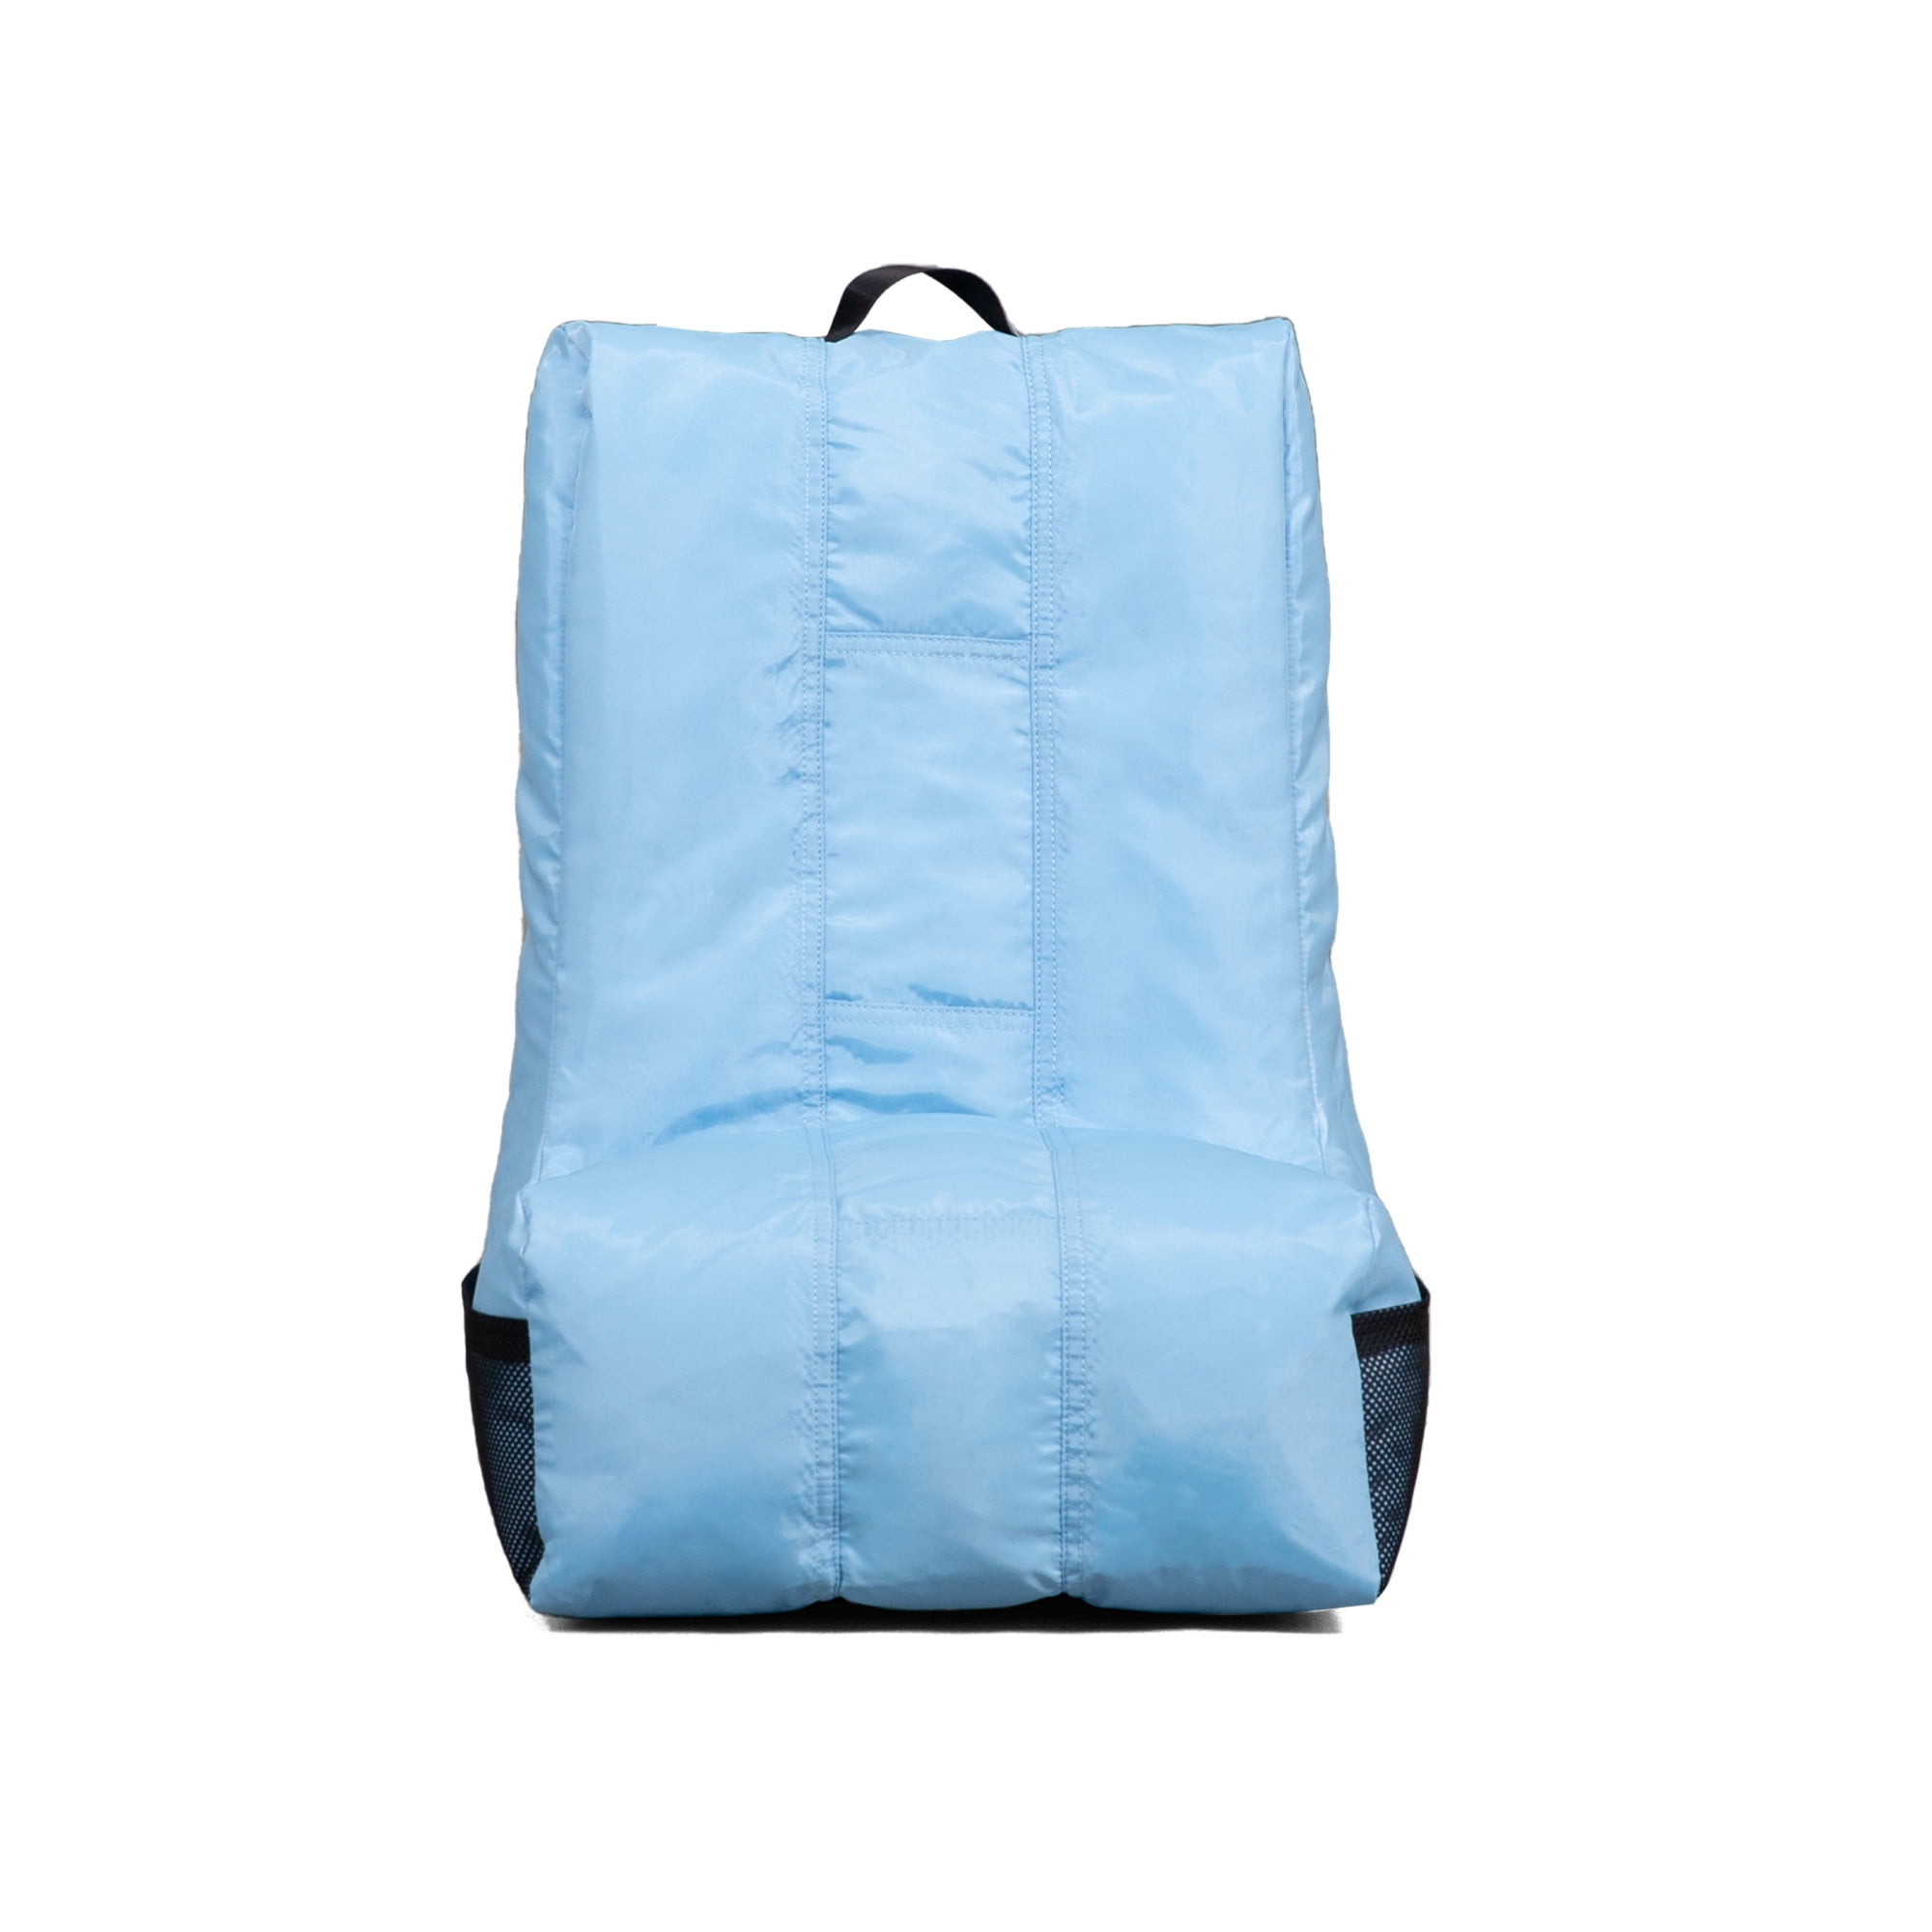 Big Joe Video Lounger Bean Bag Chair, Clear Sky Smartmax, Durable Polyester Nylon Blend, 2 Feet